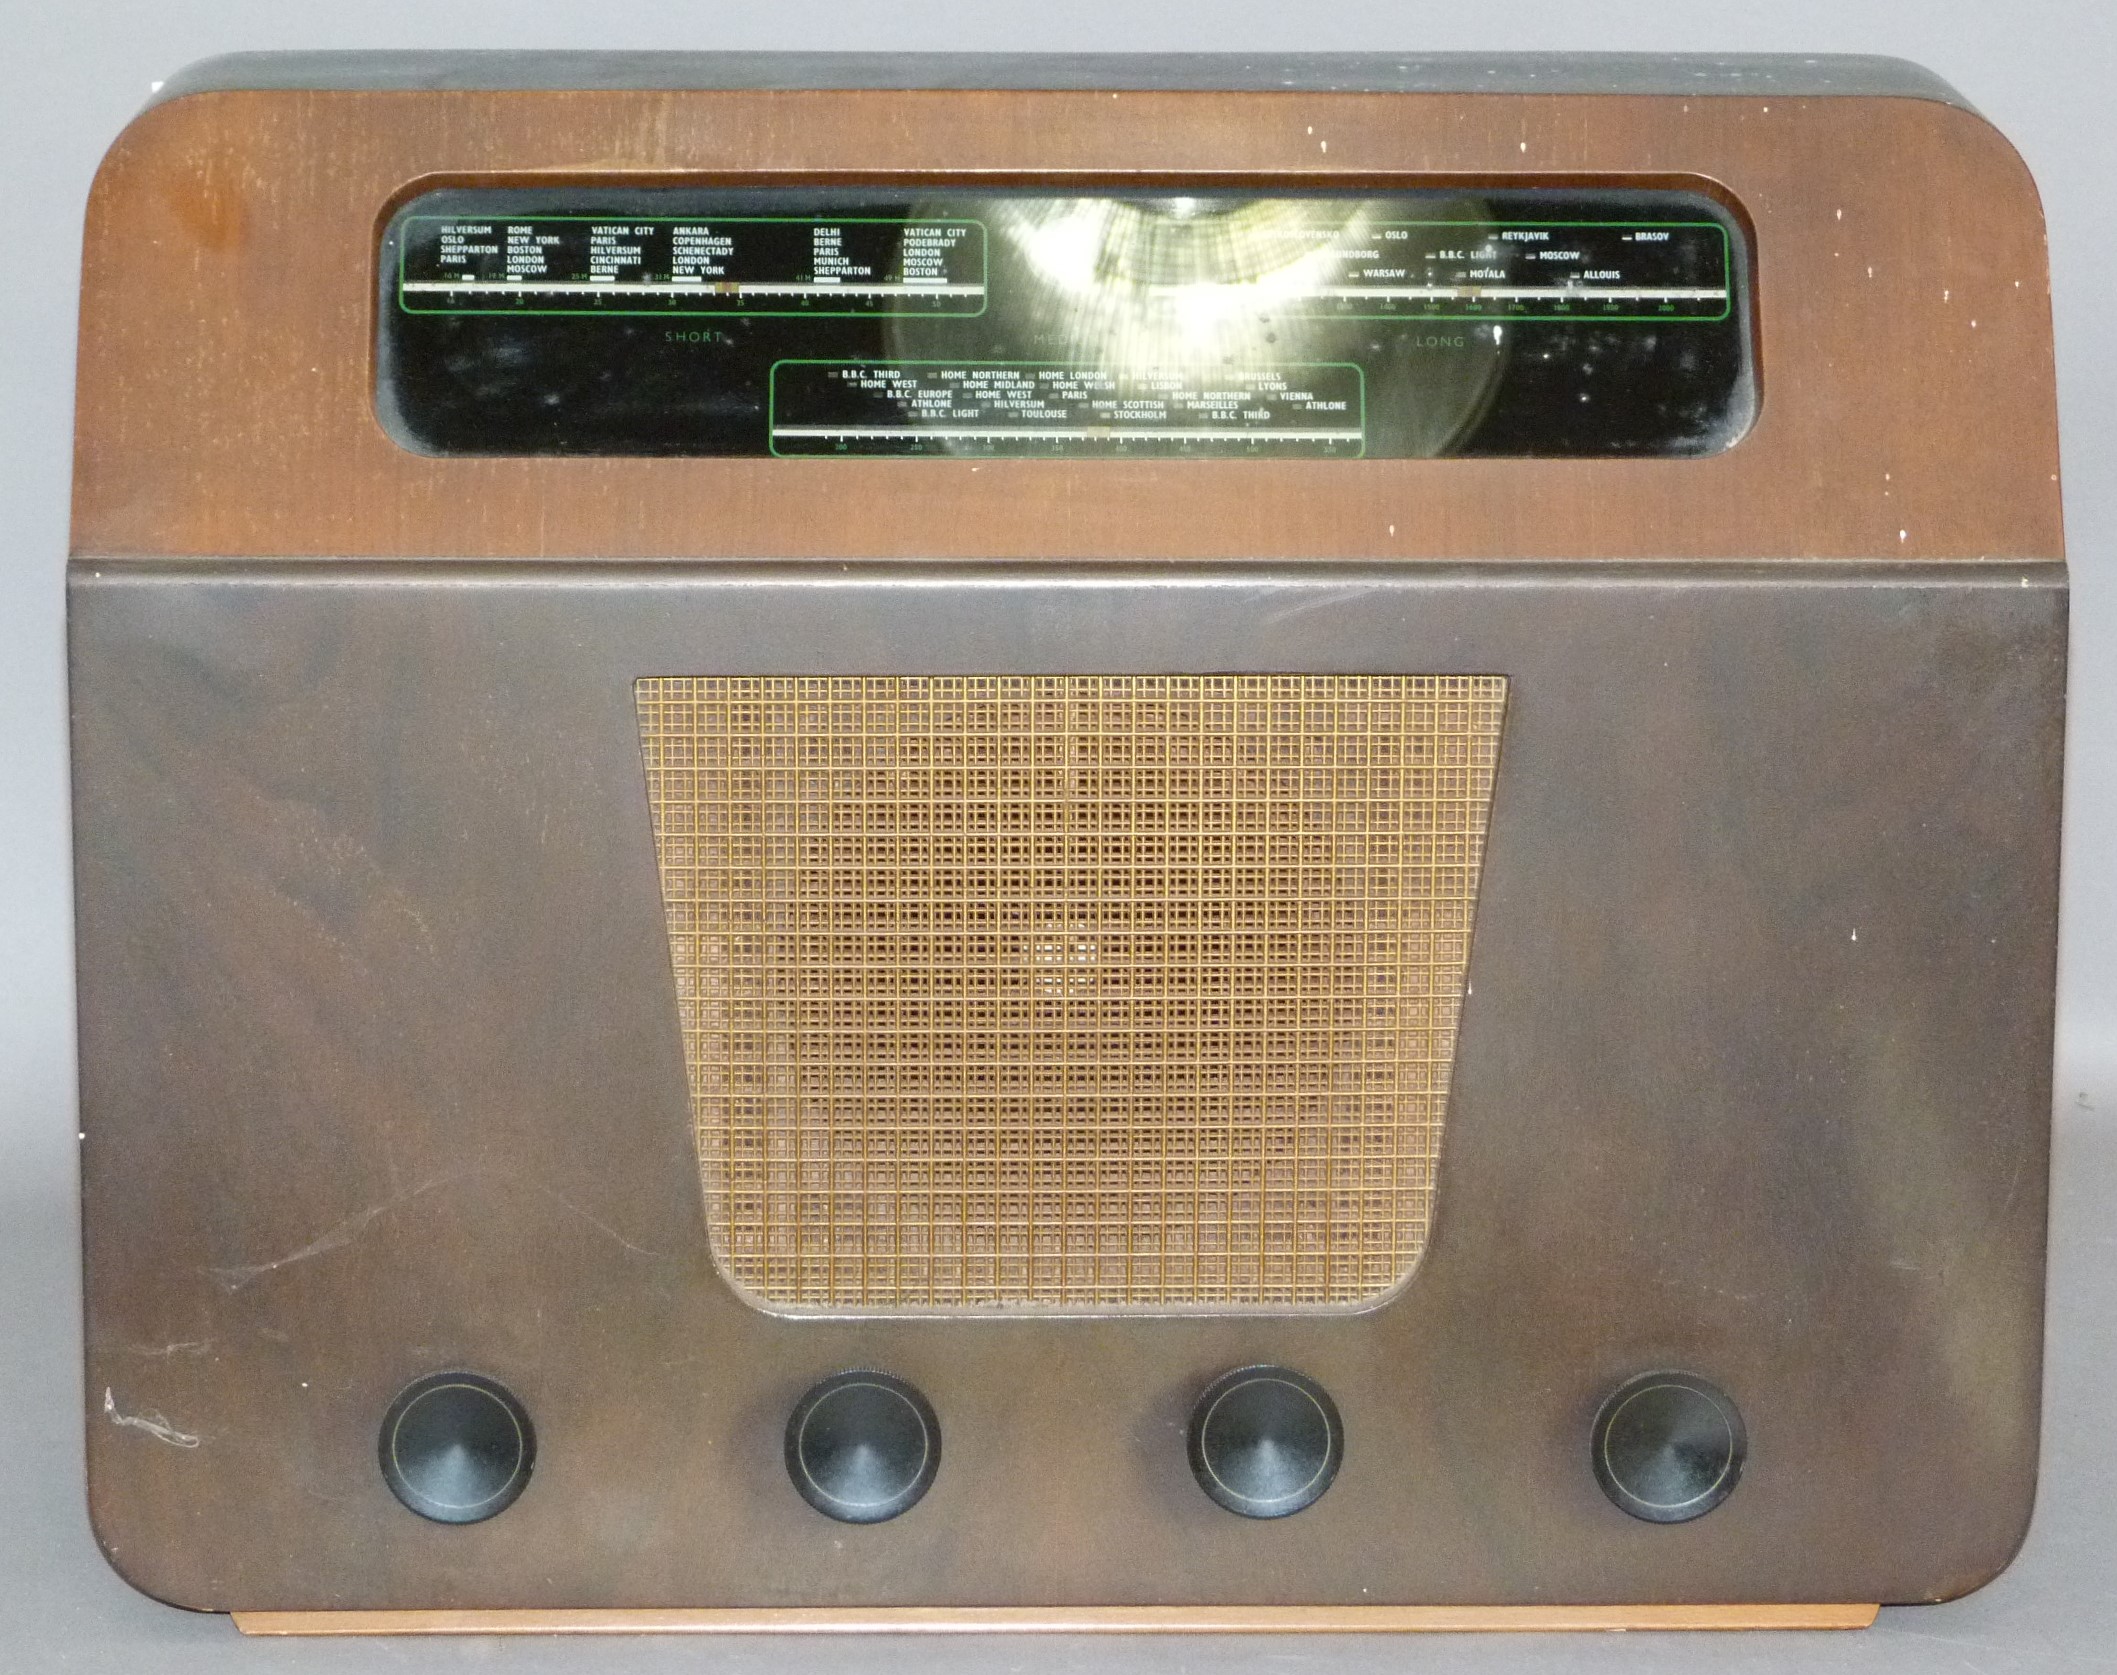 A Murphy Radio Ltd Type A170 wireless, walnut veneered case with glass fronted display